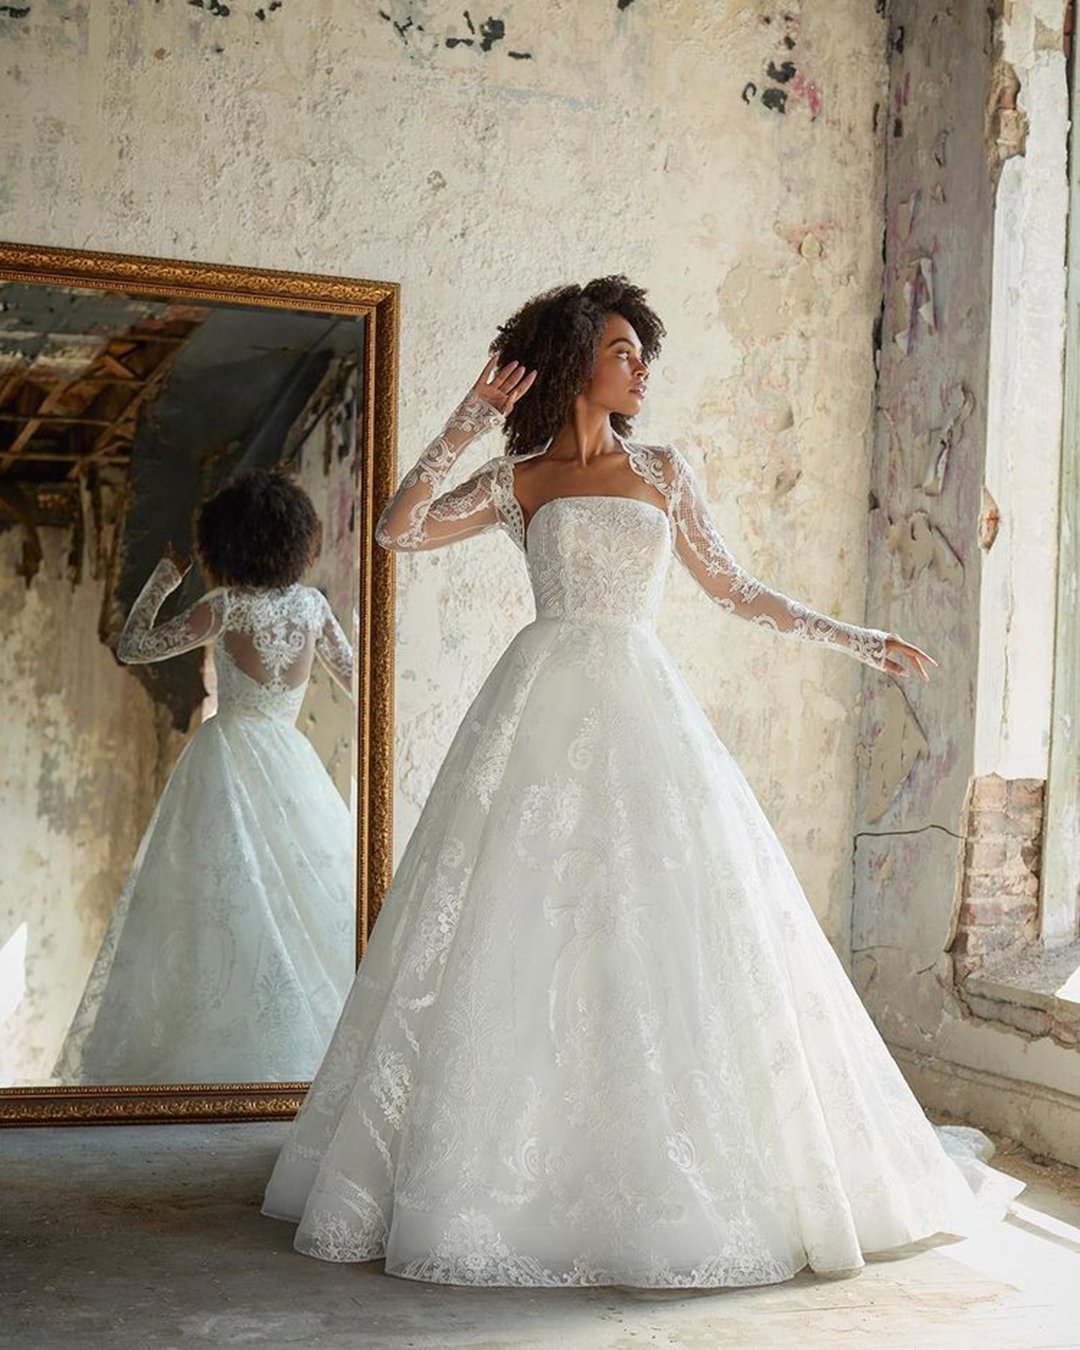 Modest Wedding Dresses: 33 Elegant ...